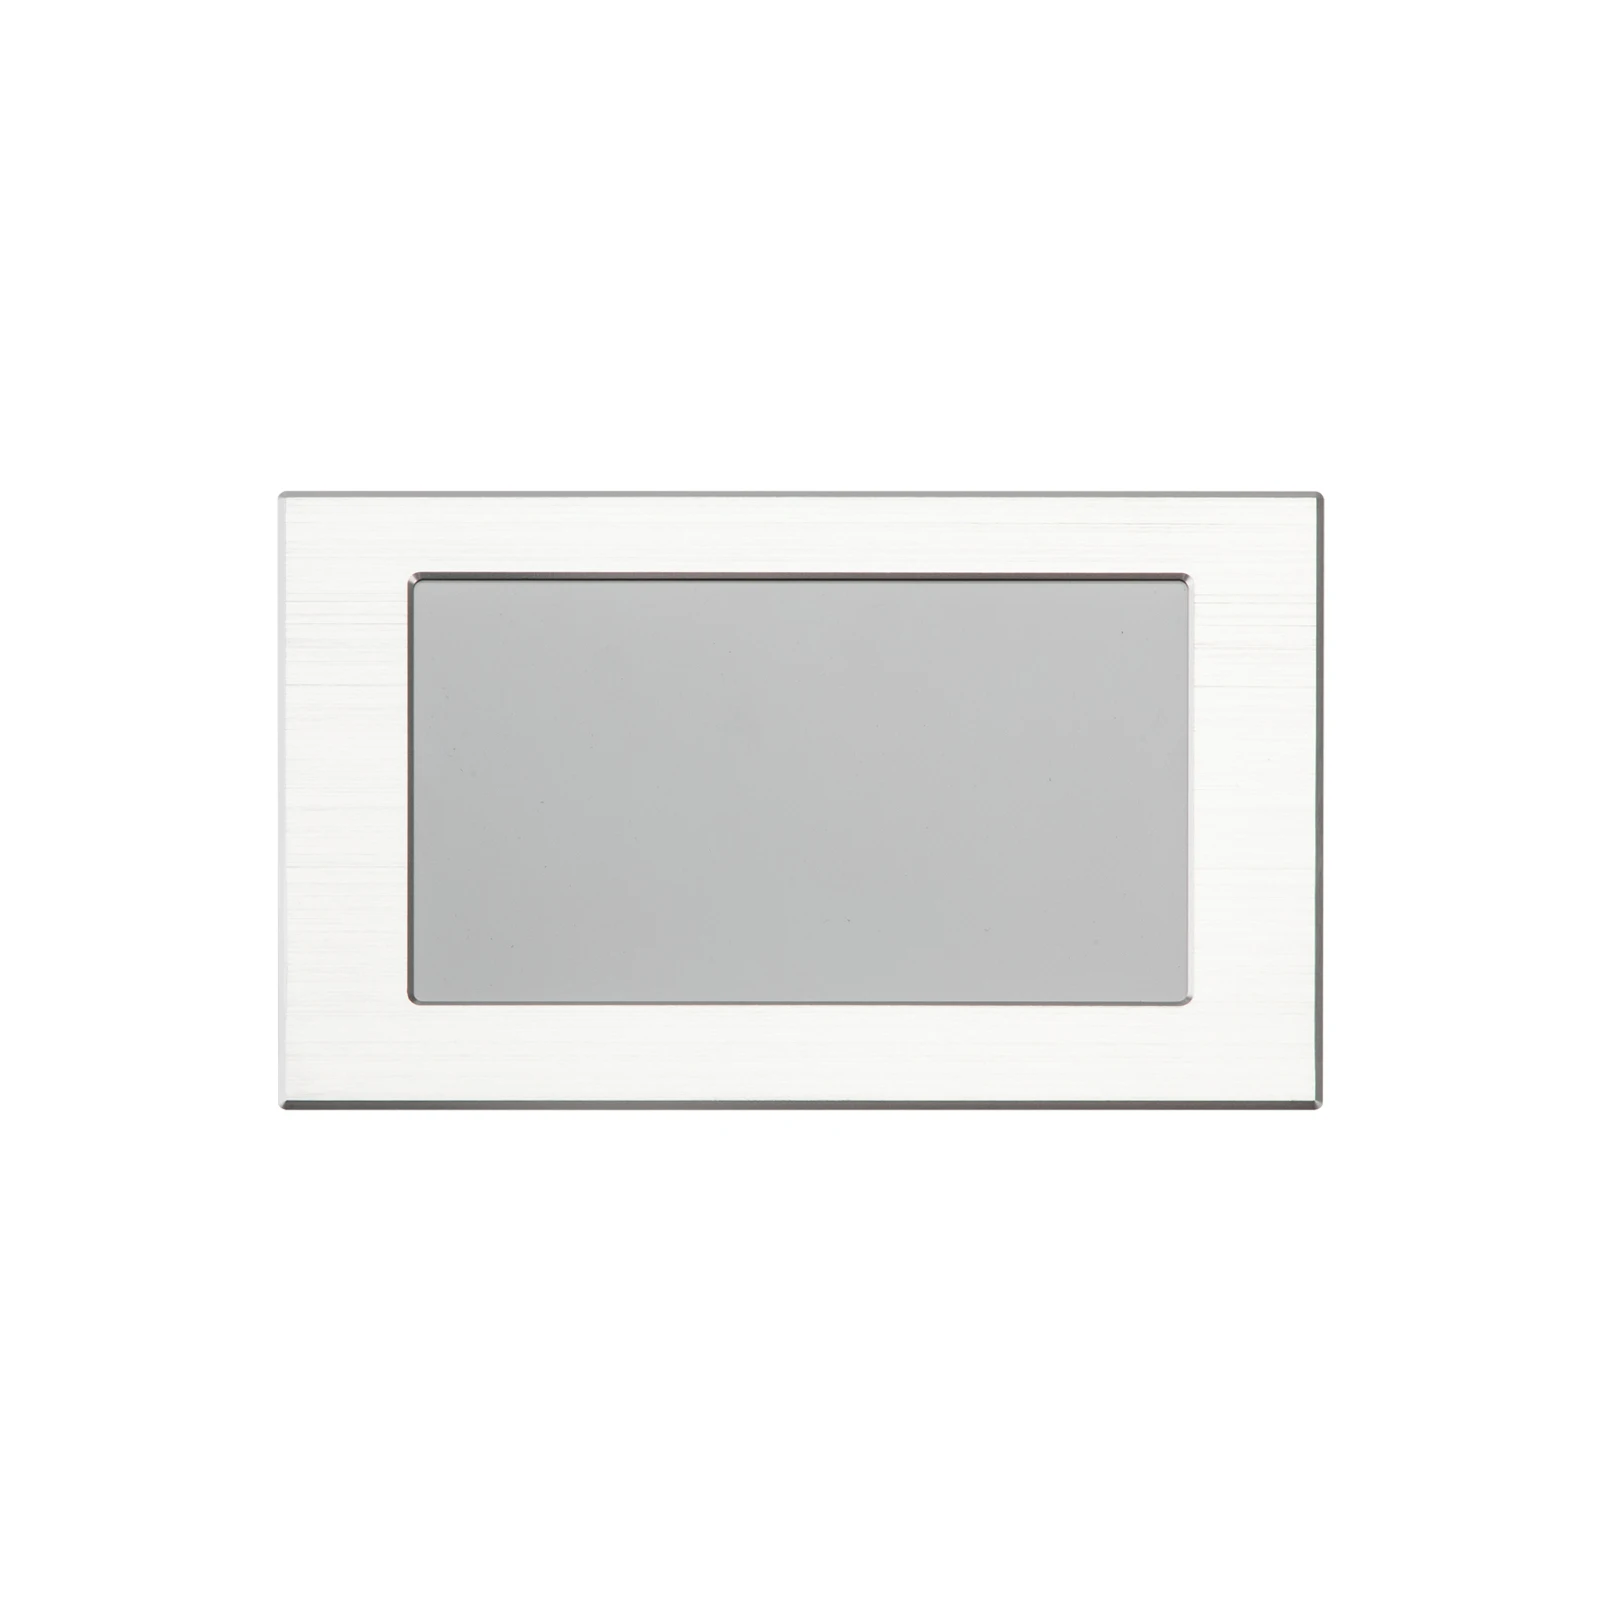 7.0 inch Metal Frame for STONE HMI Smart LCD Display Module STWA070WT-01